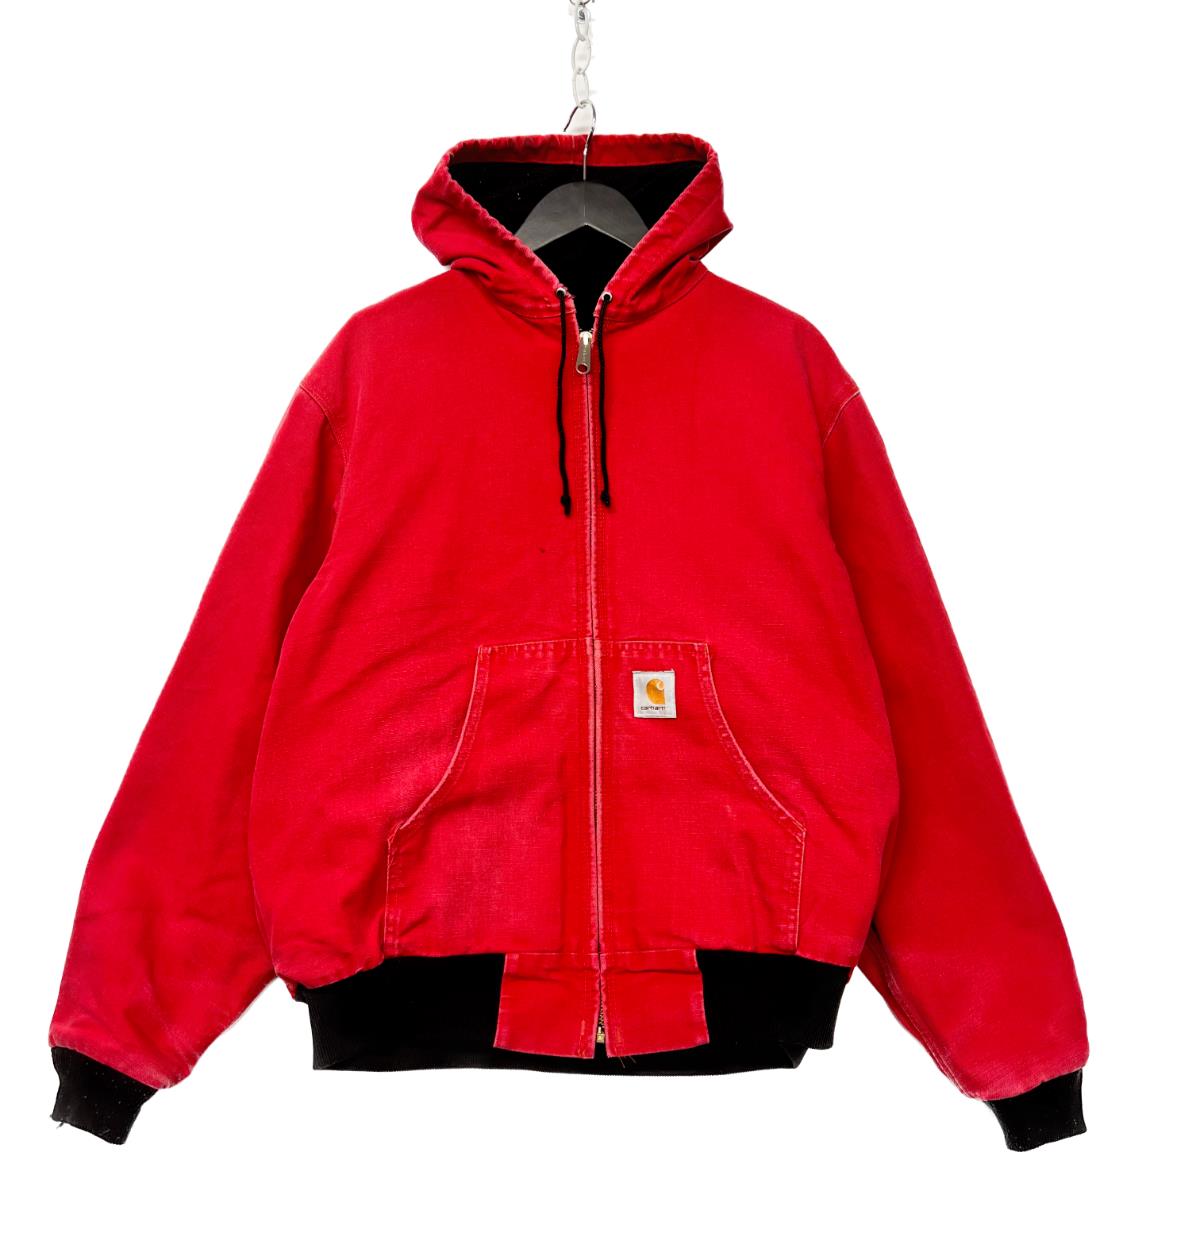 Carhartt Zip Up Hooded Jacket Size L